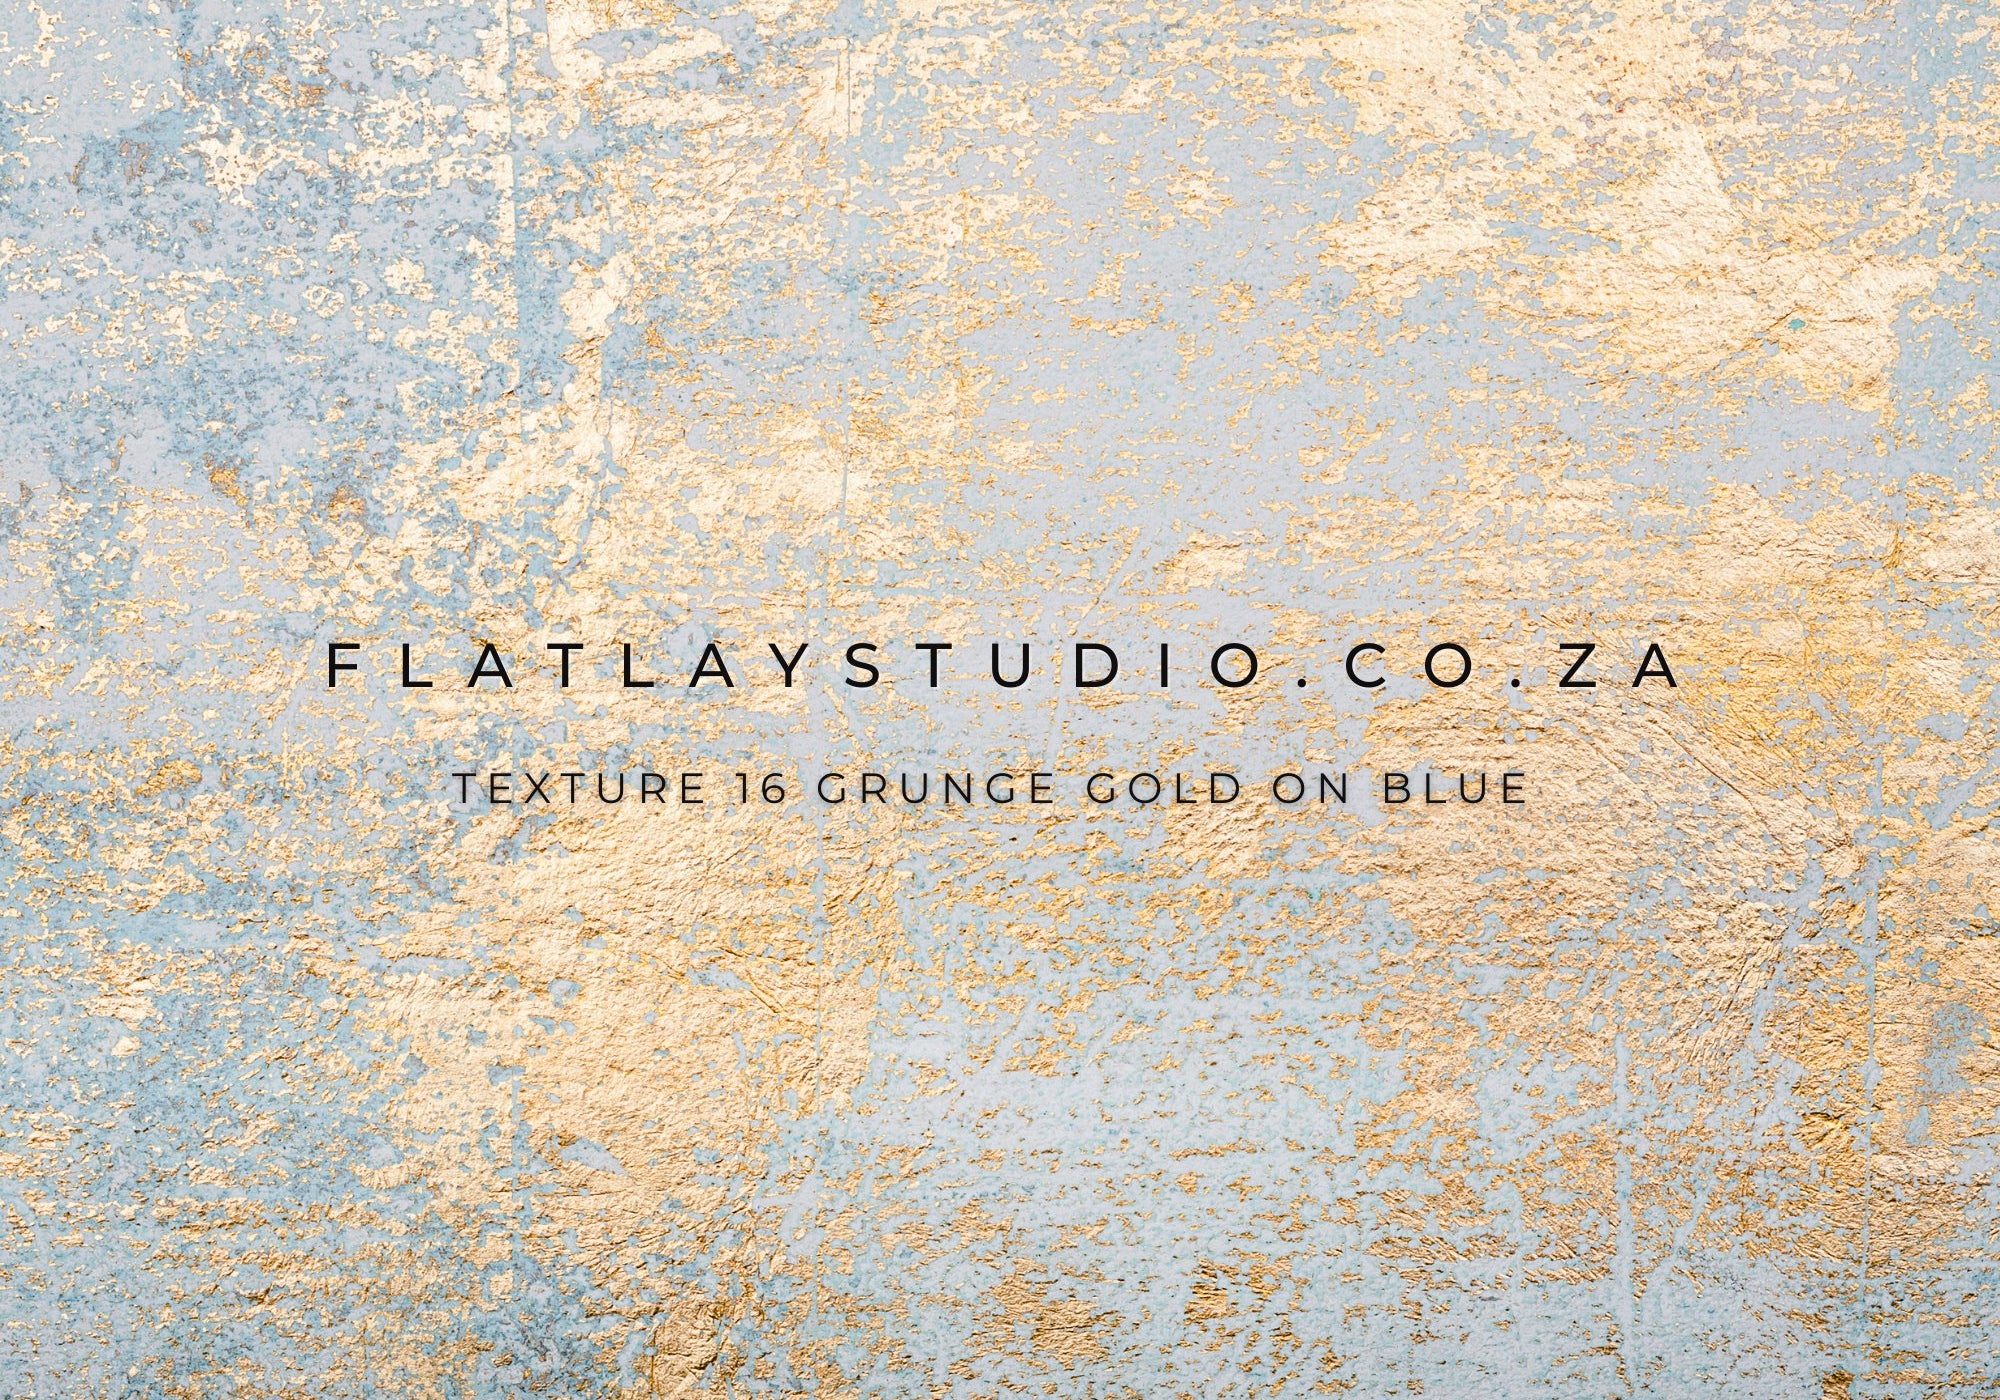 Texture 16 Grunge Gold on Blue - FlatlayStudio